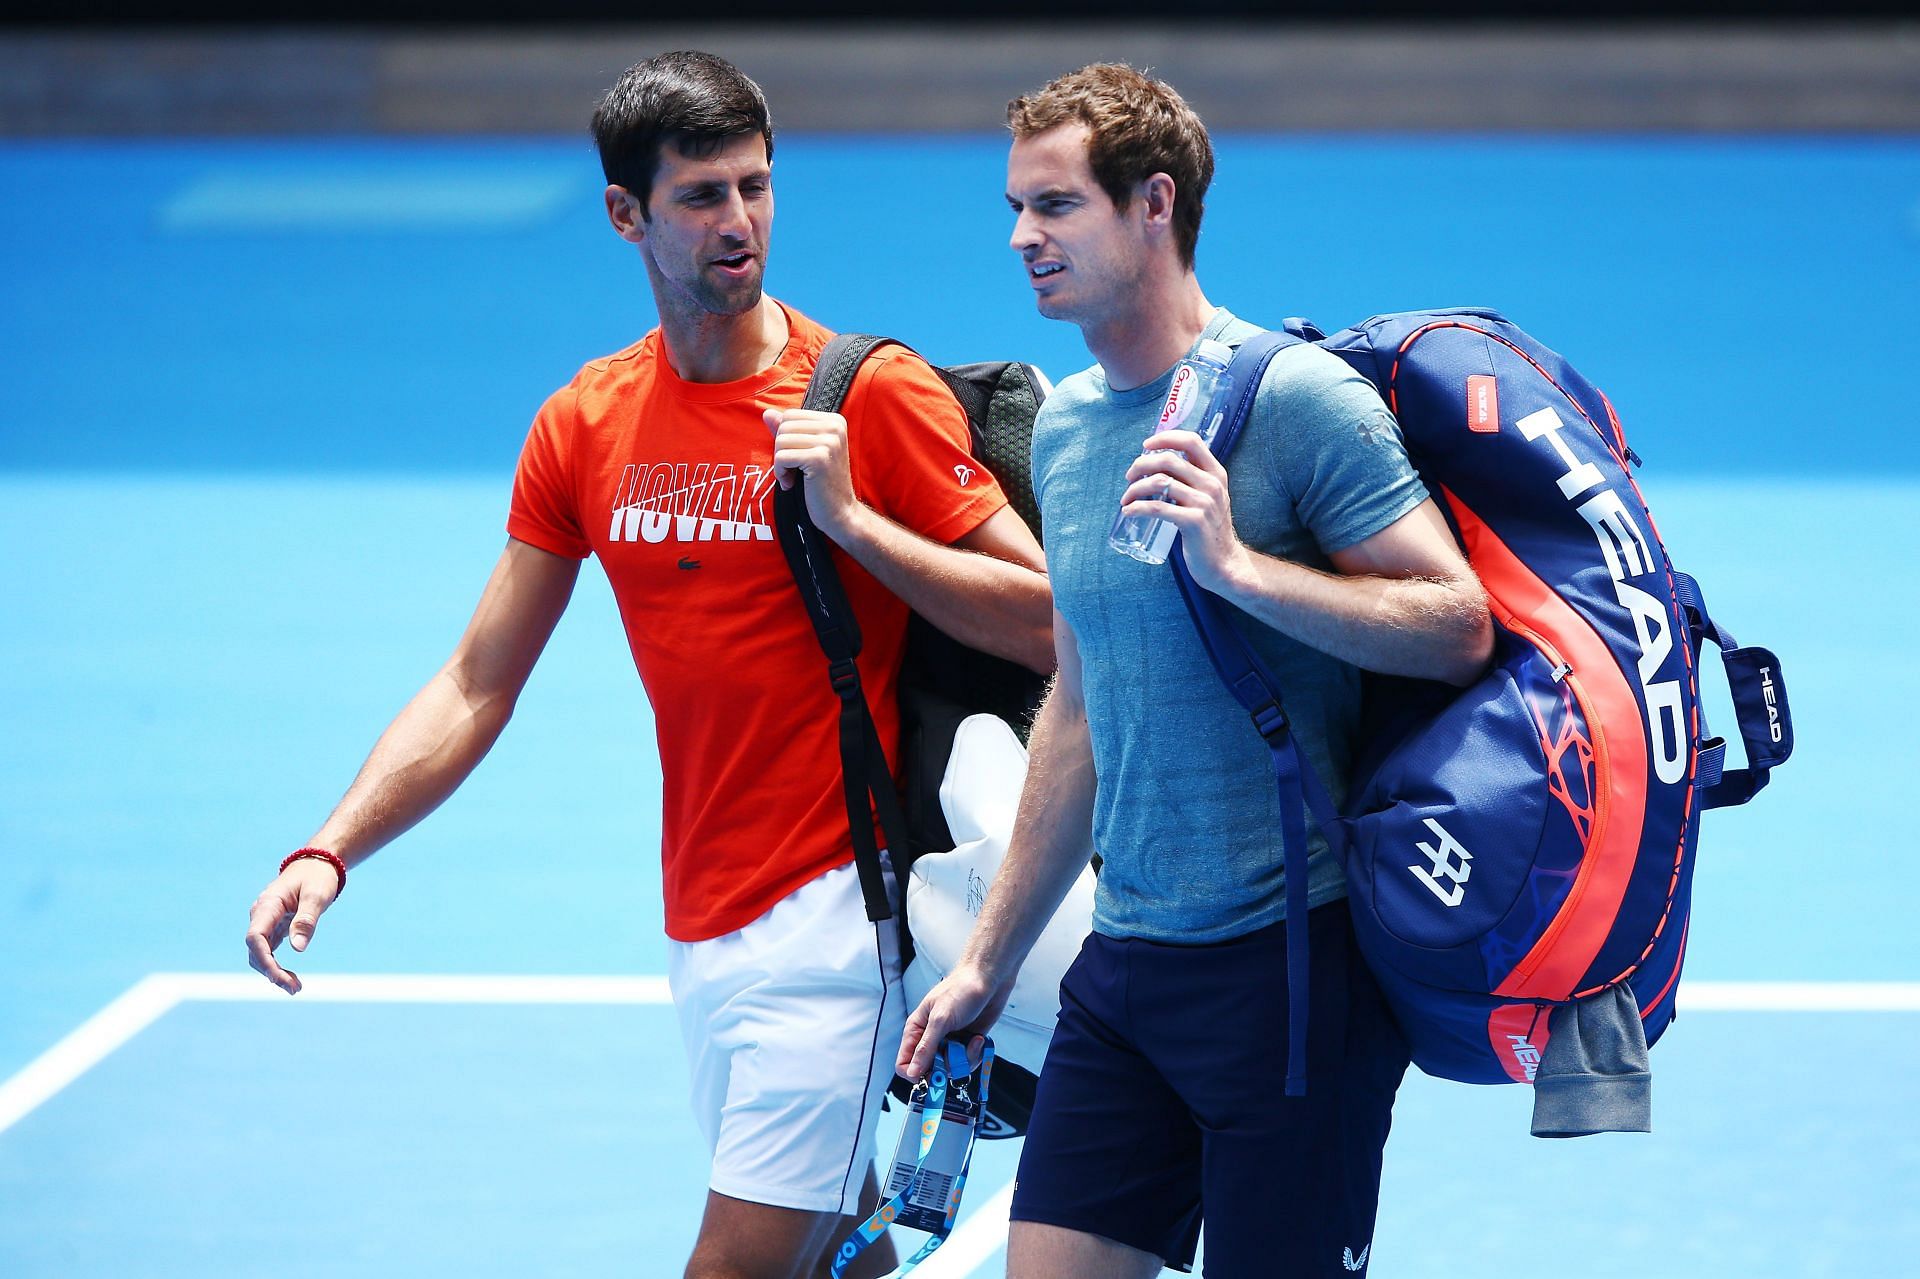 Novak Djokovic and Andy Murray at the 2021 Australian Open